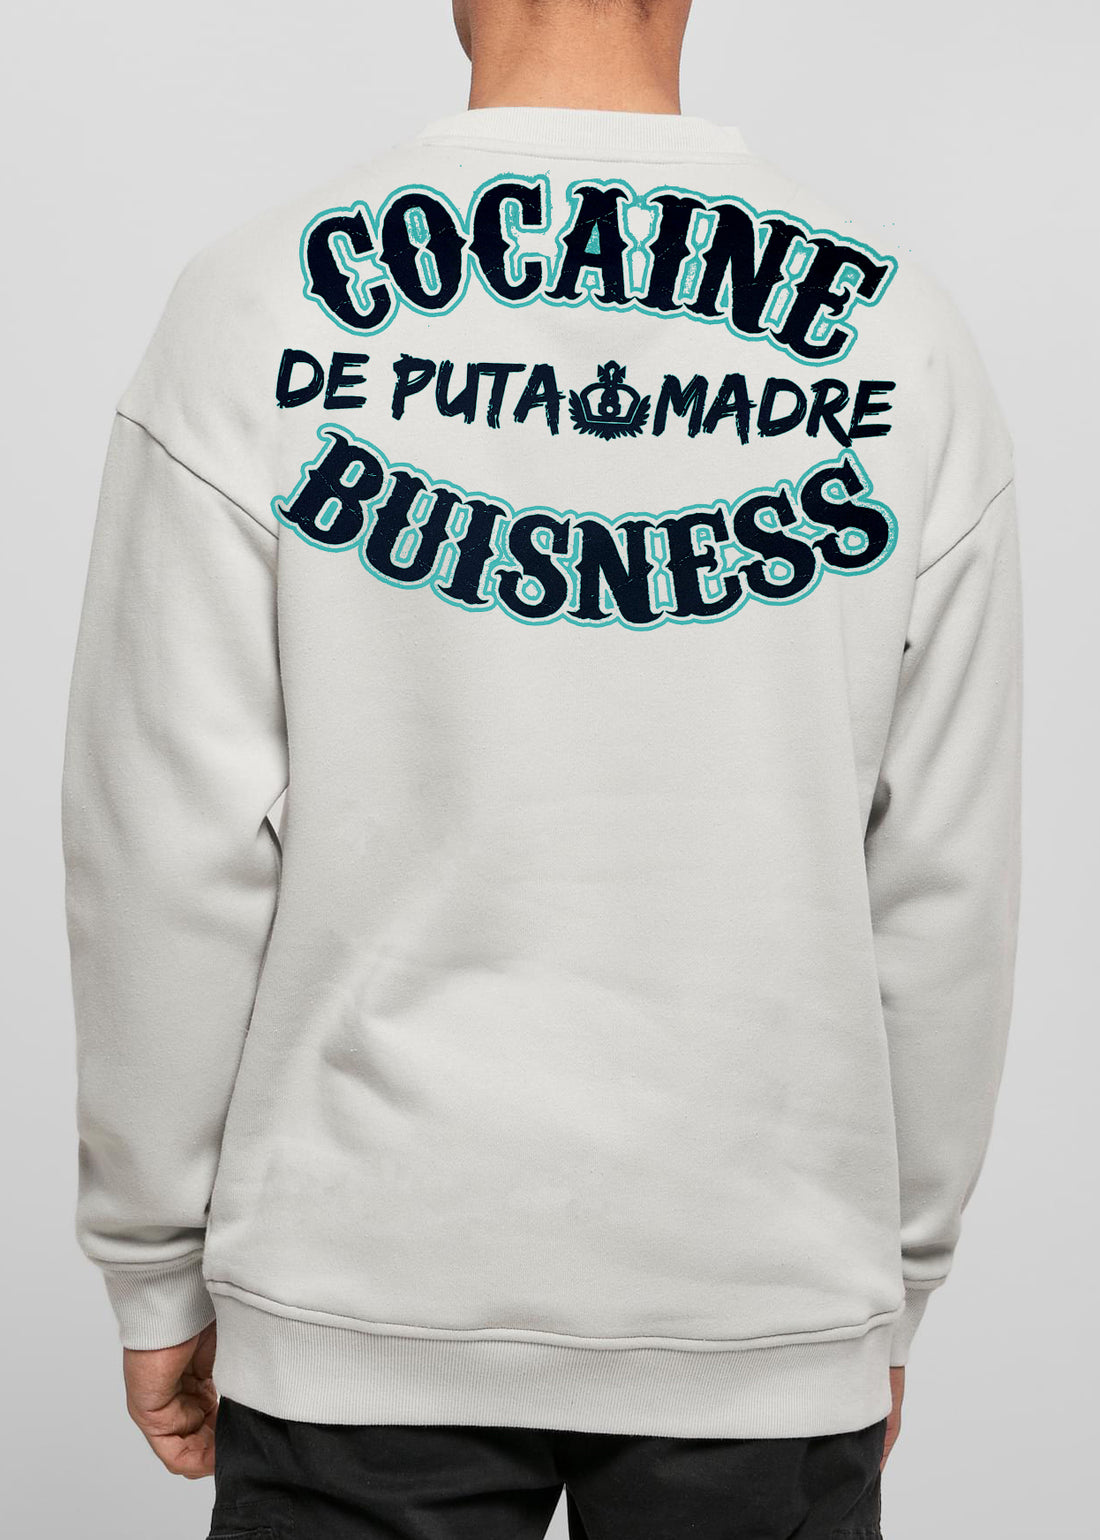 DPM 69 Men's sweatshirt design  Pablo Escobar Business